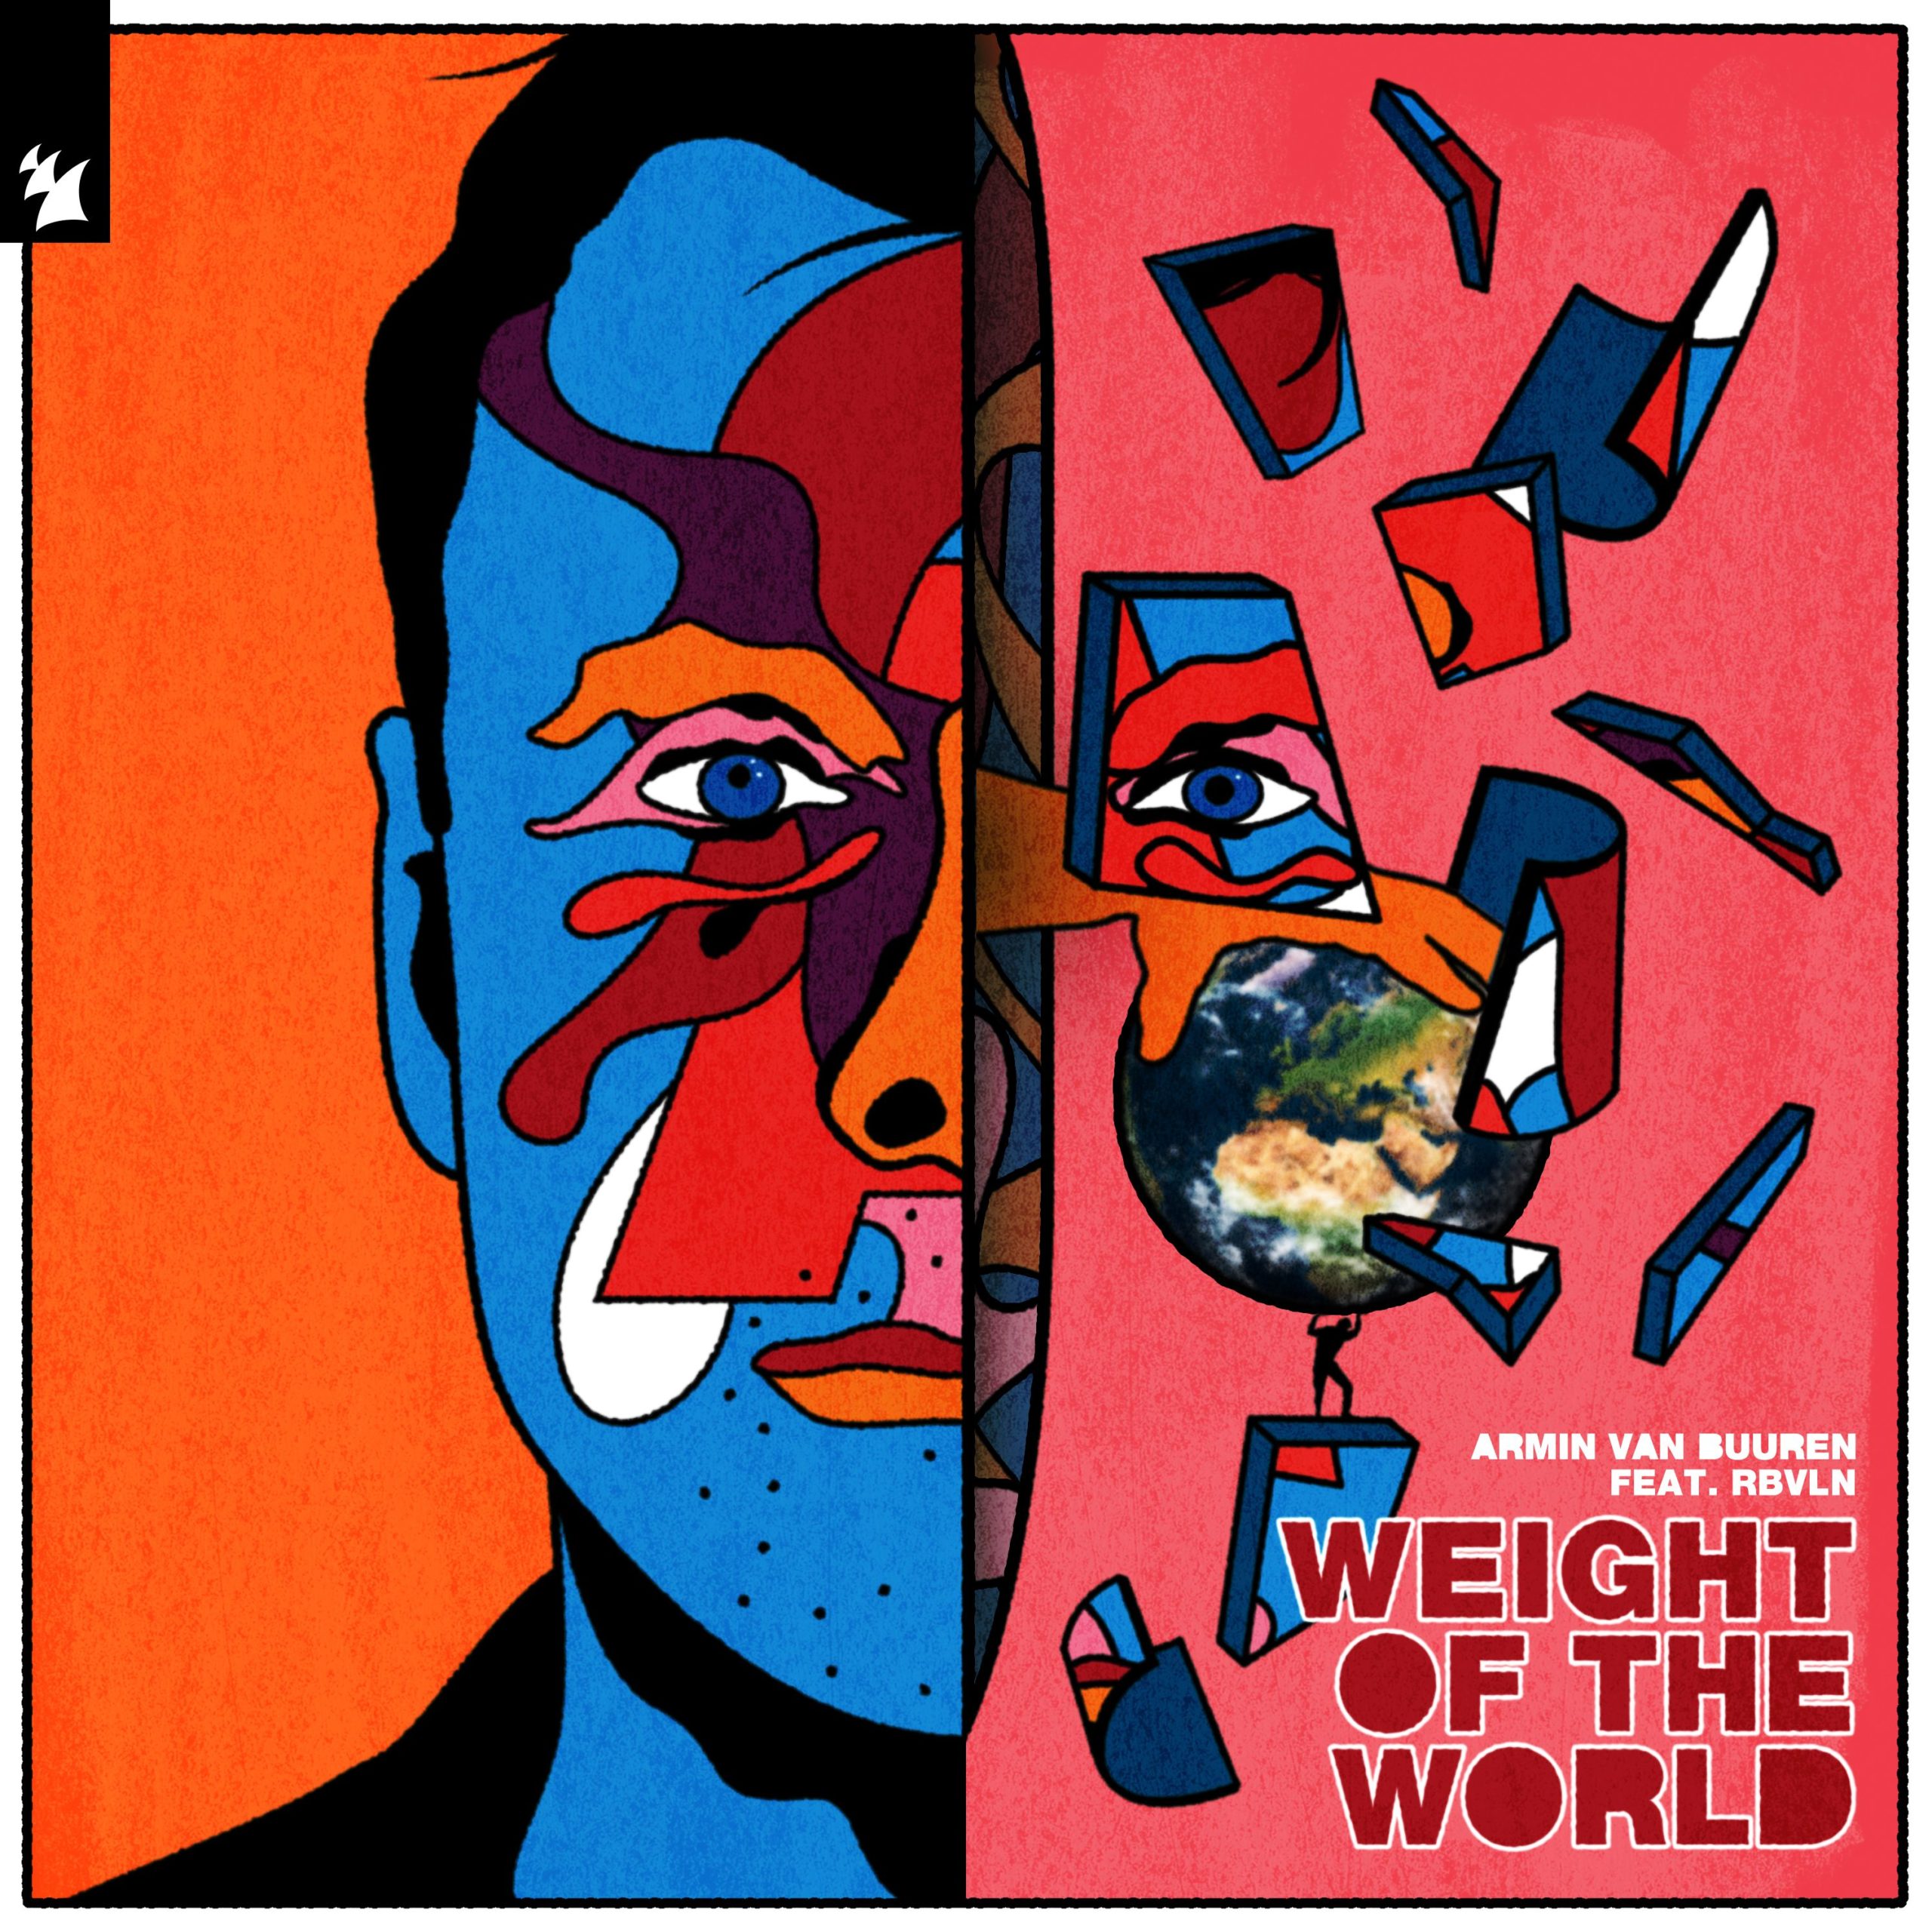 Armin van Buuren feat. RBVLN presents Weight Of The World on Armada Music